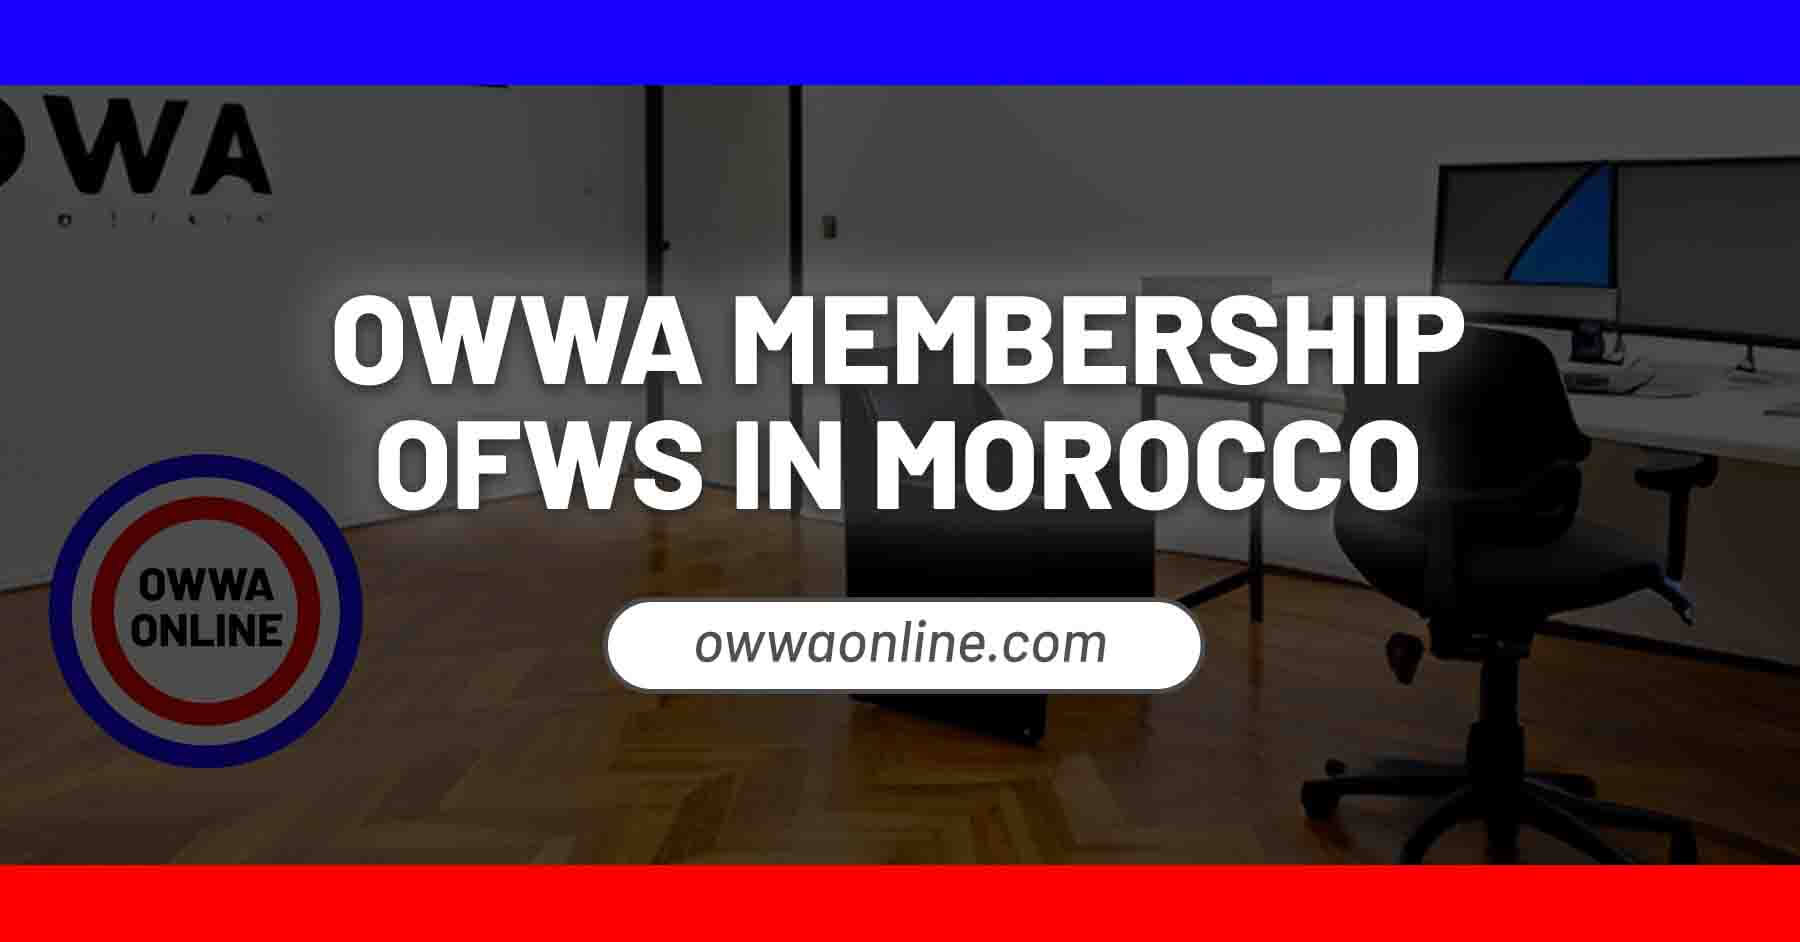 owwa membership application renewal in morocco